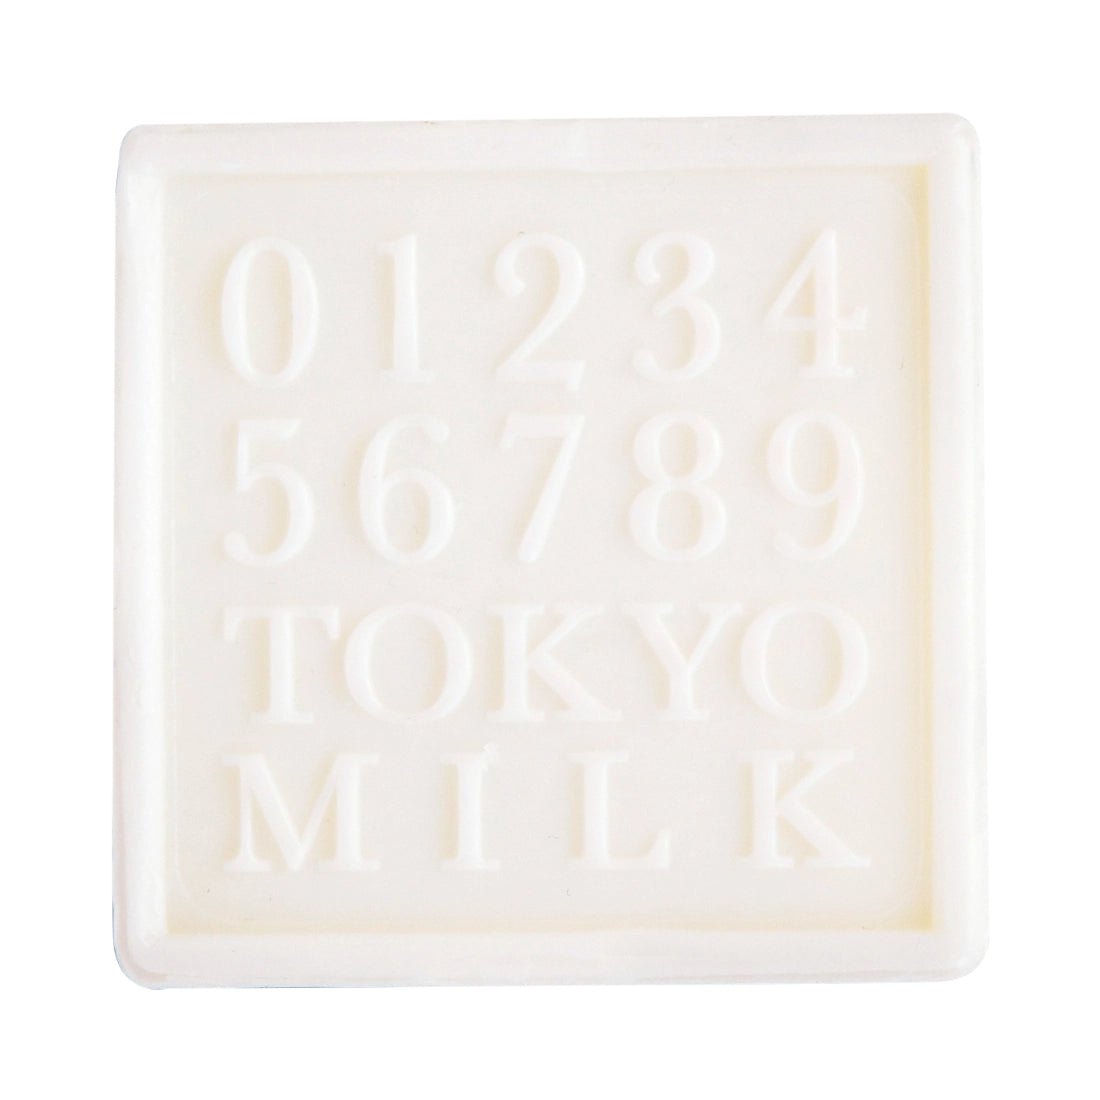 Tokyomilk #GirlBoss Finest Perfumed Soap – Green Tea Fragrance - 4oz